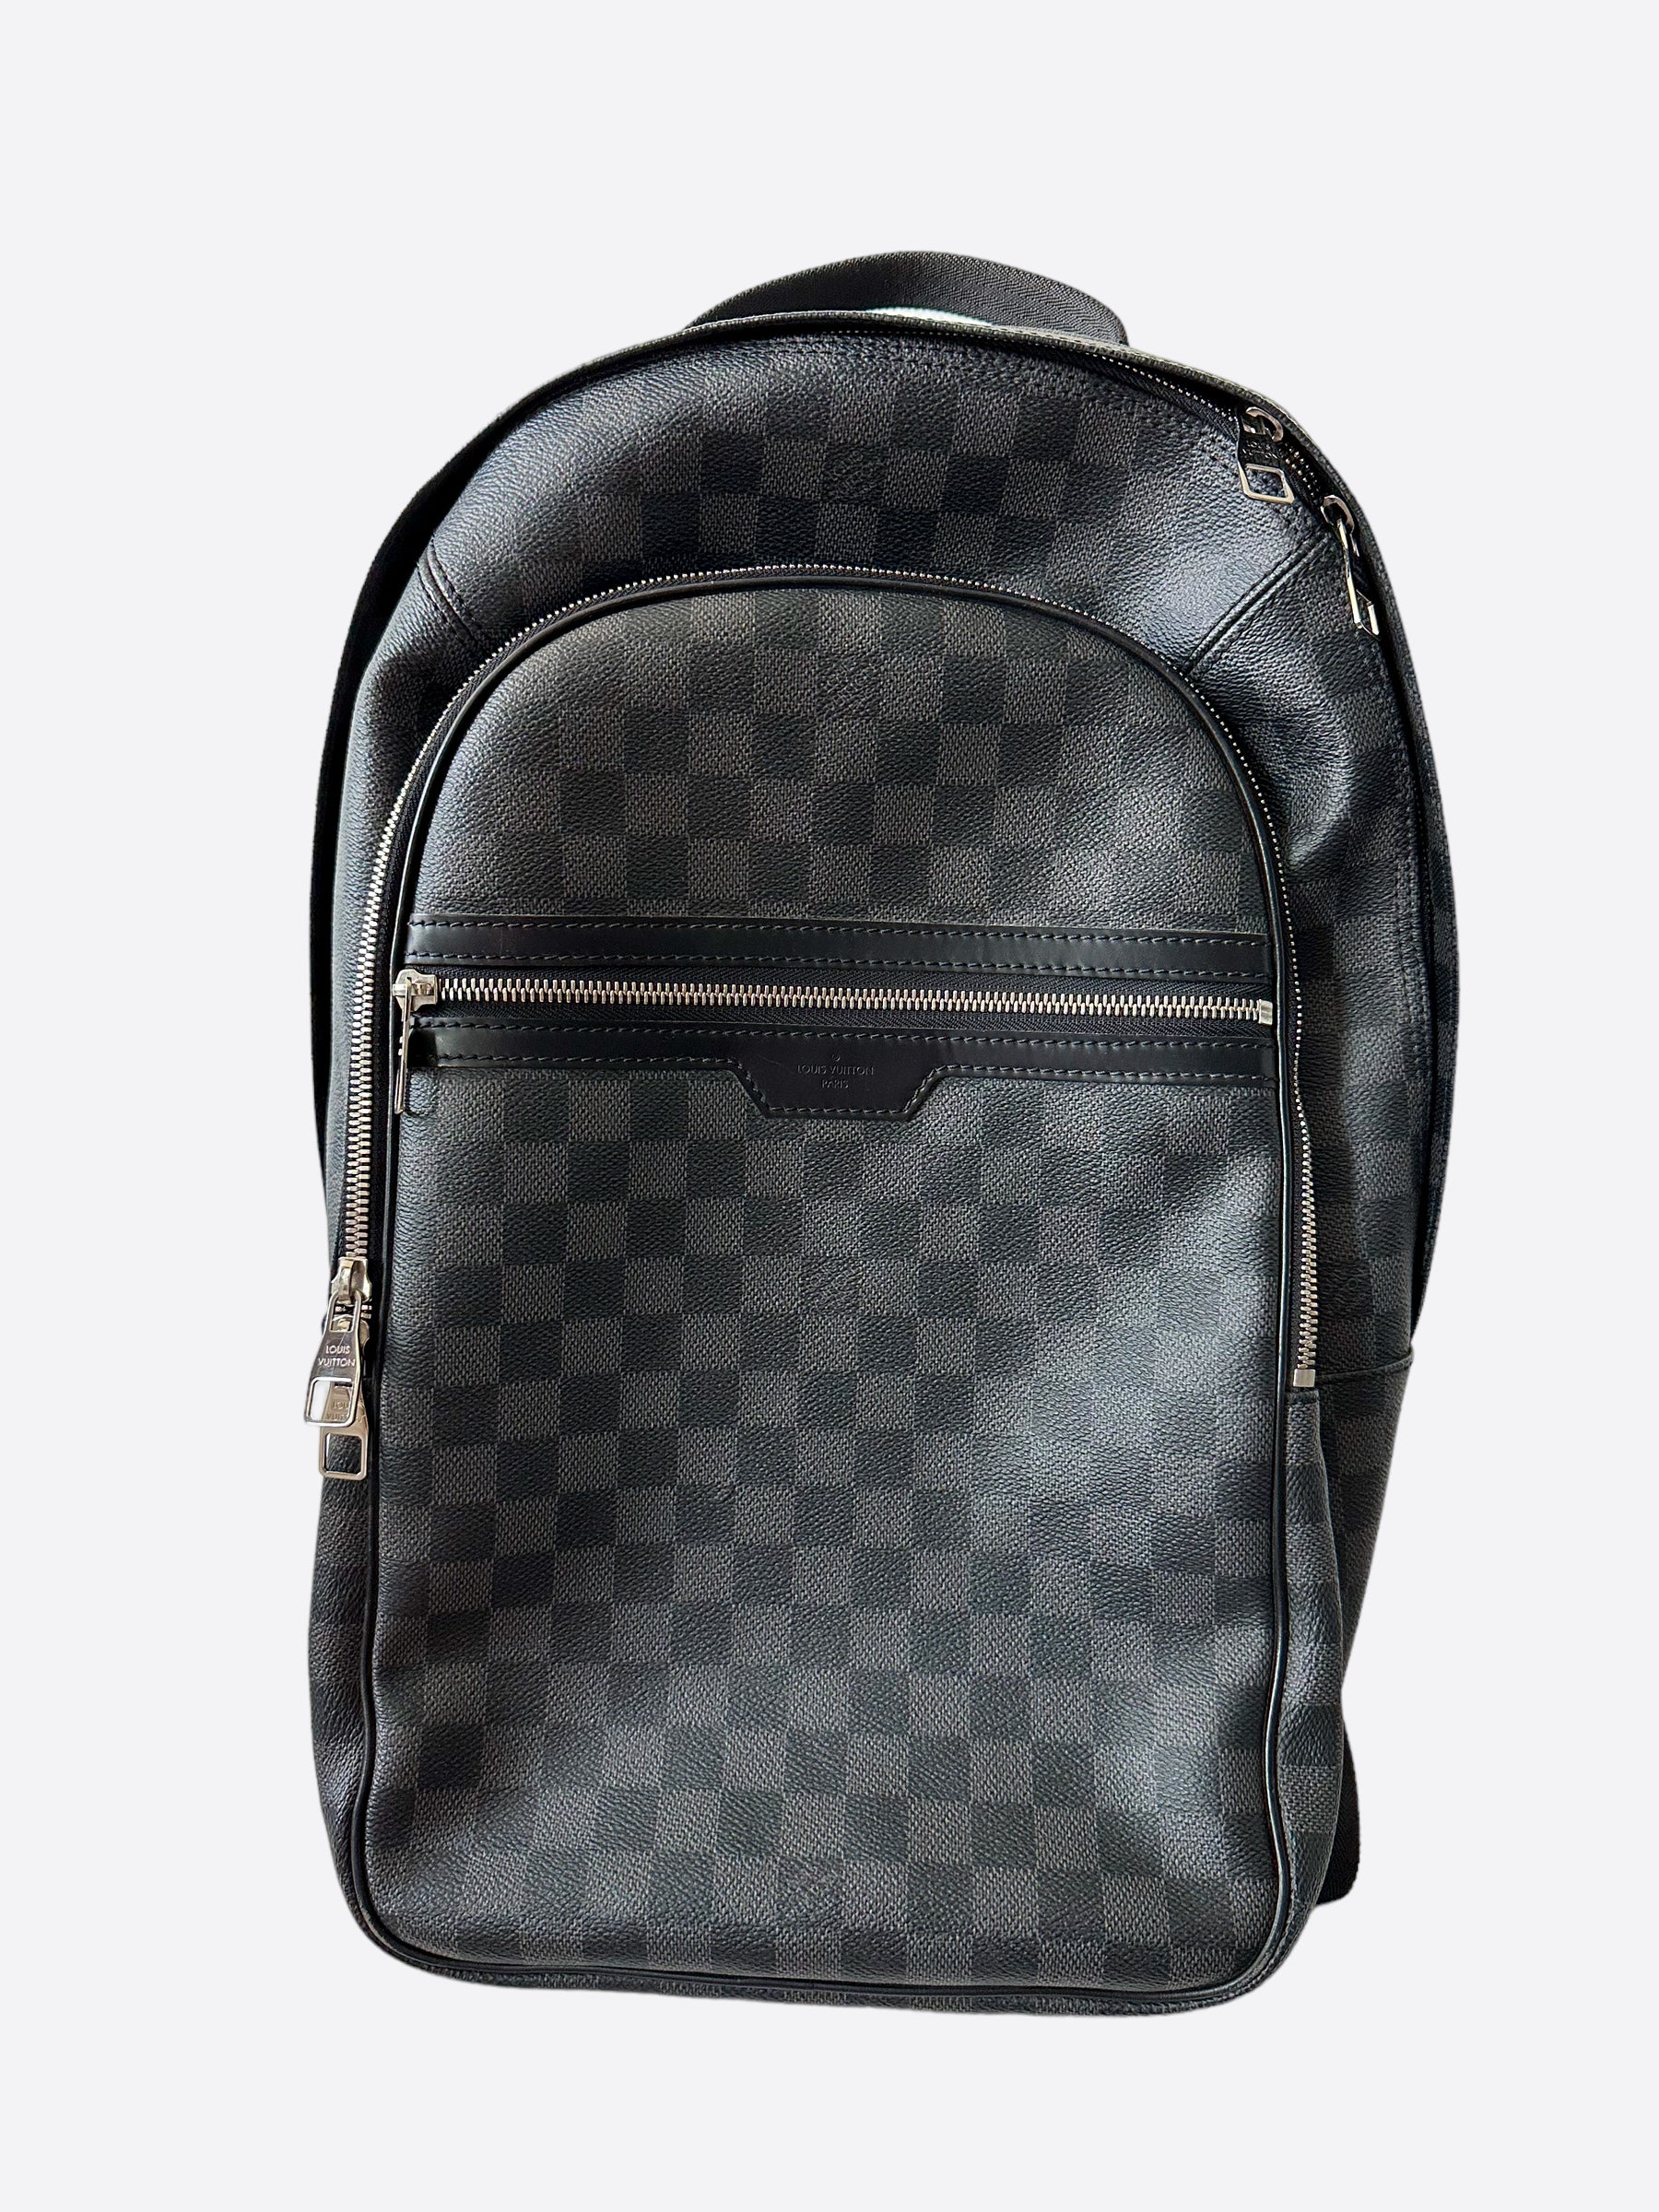 louis-vuitton damier graphite backpack